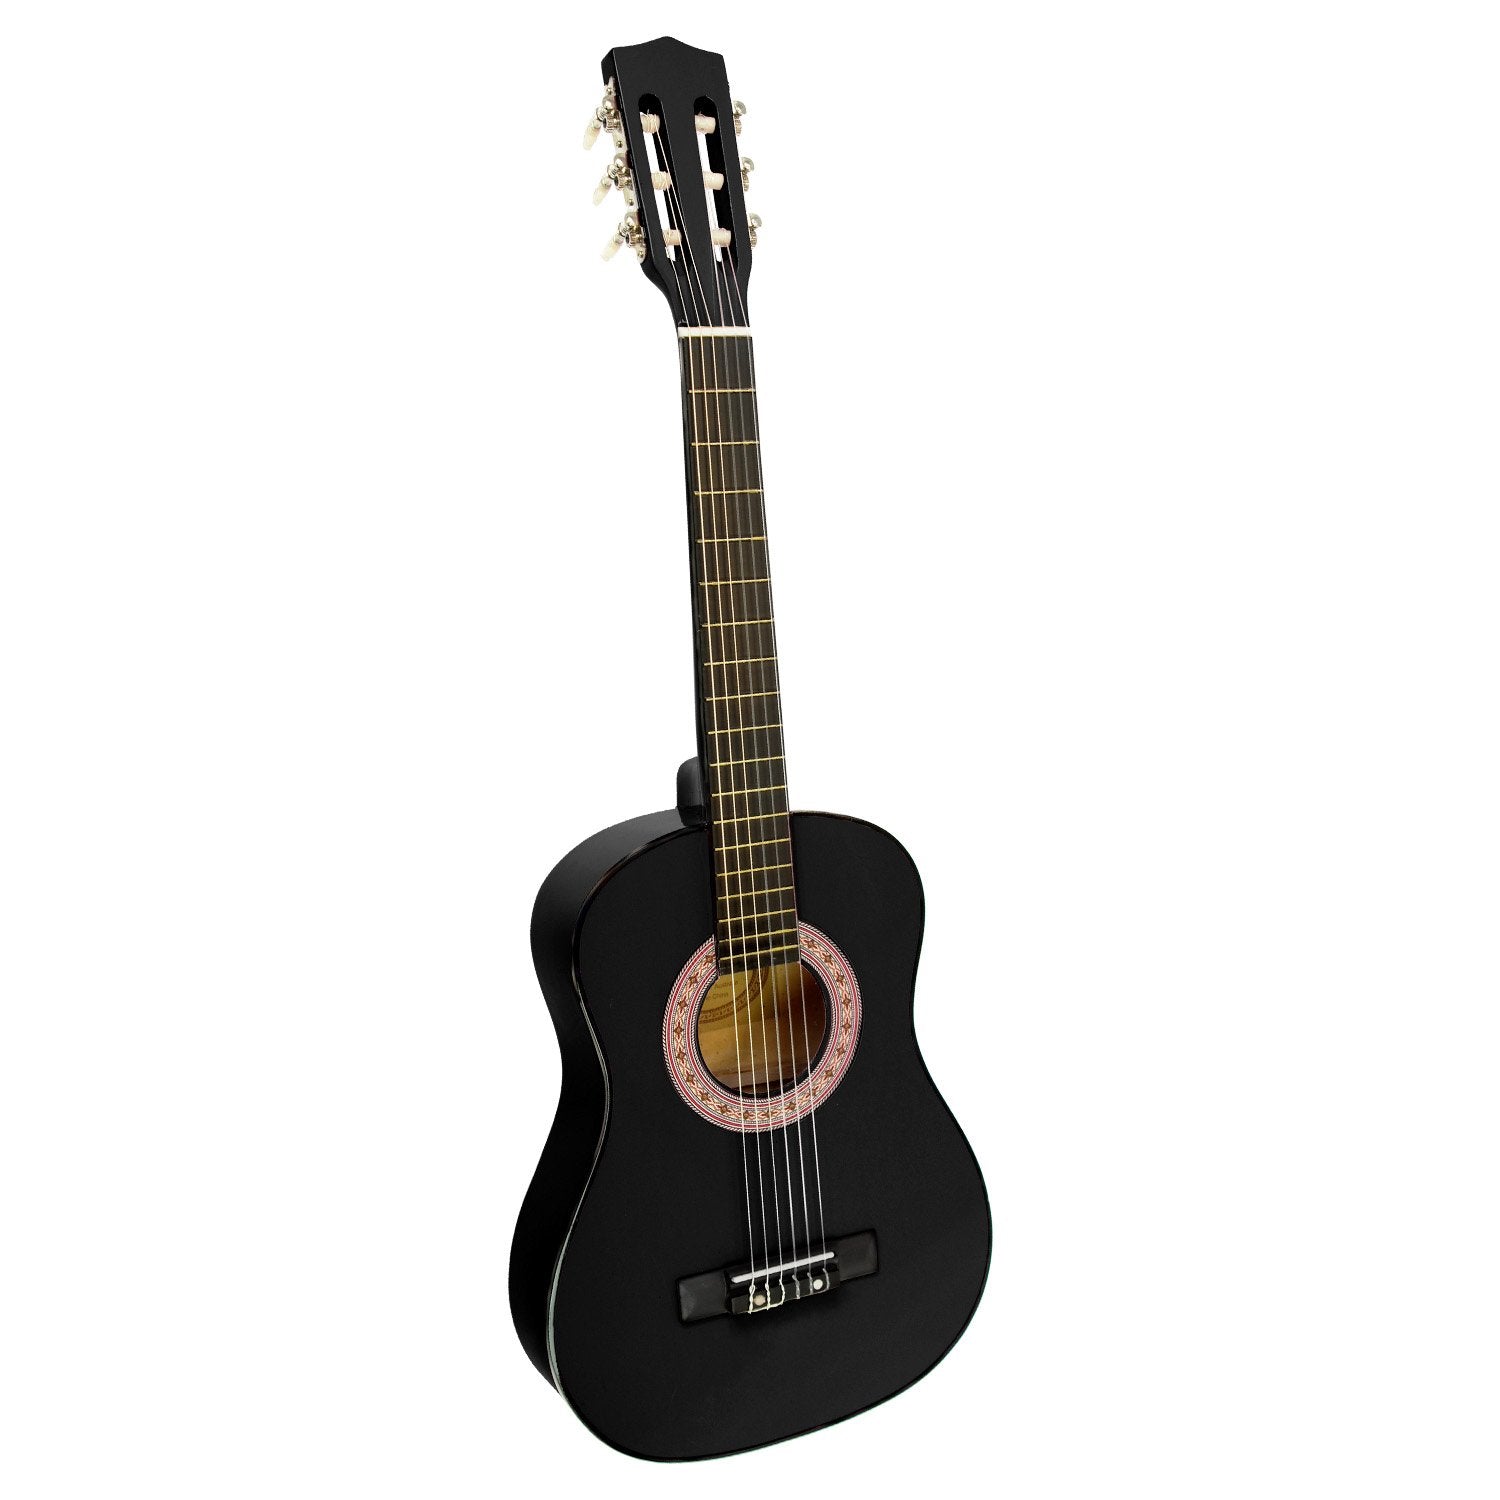 34in Acoustic Children Wooden Guitar - Black